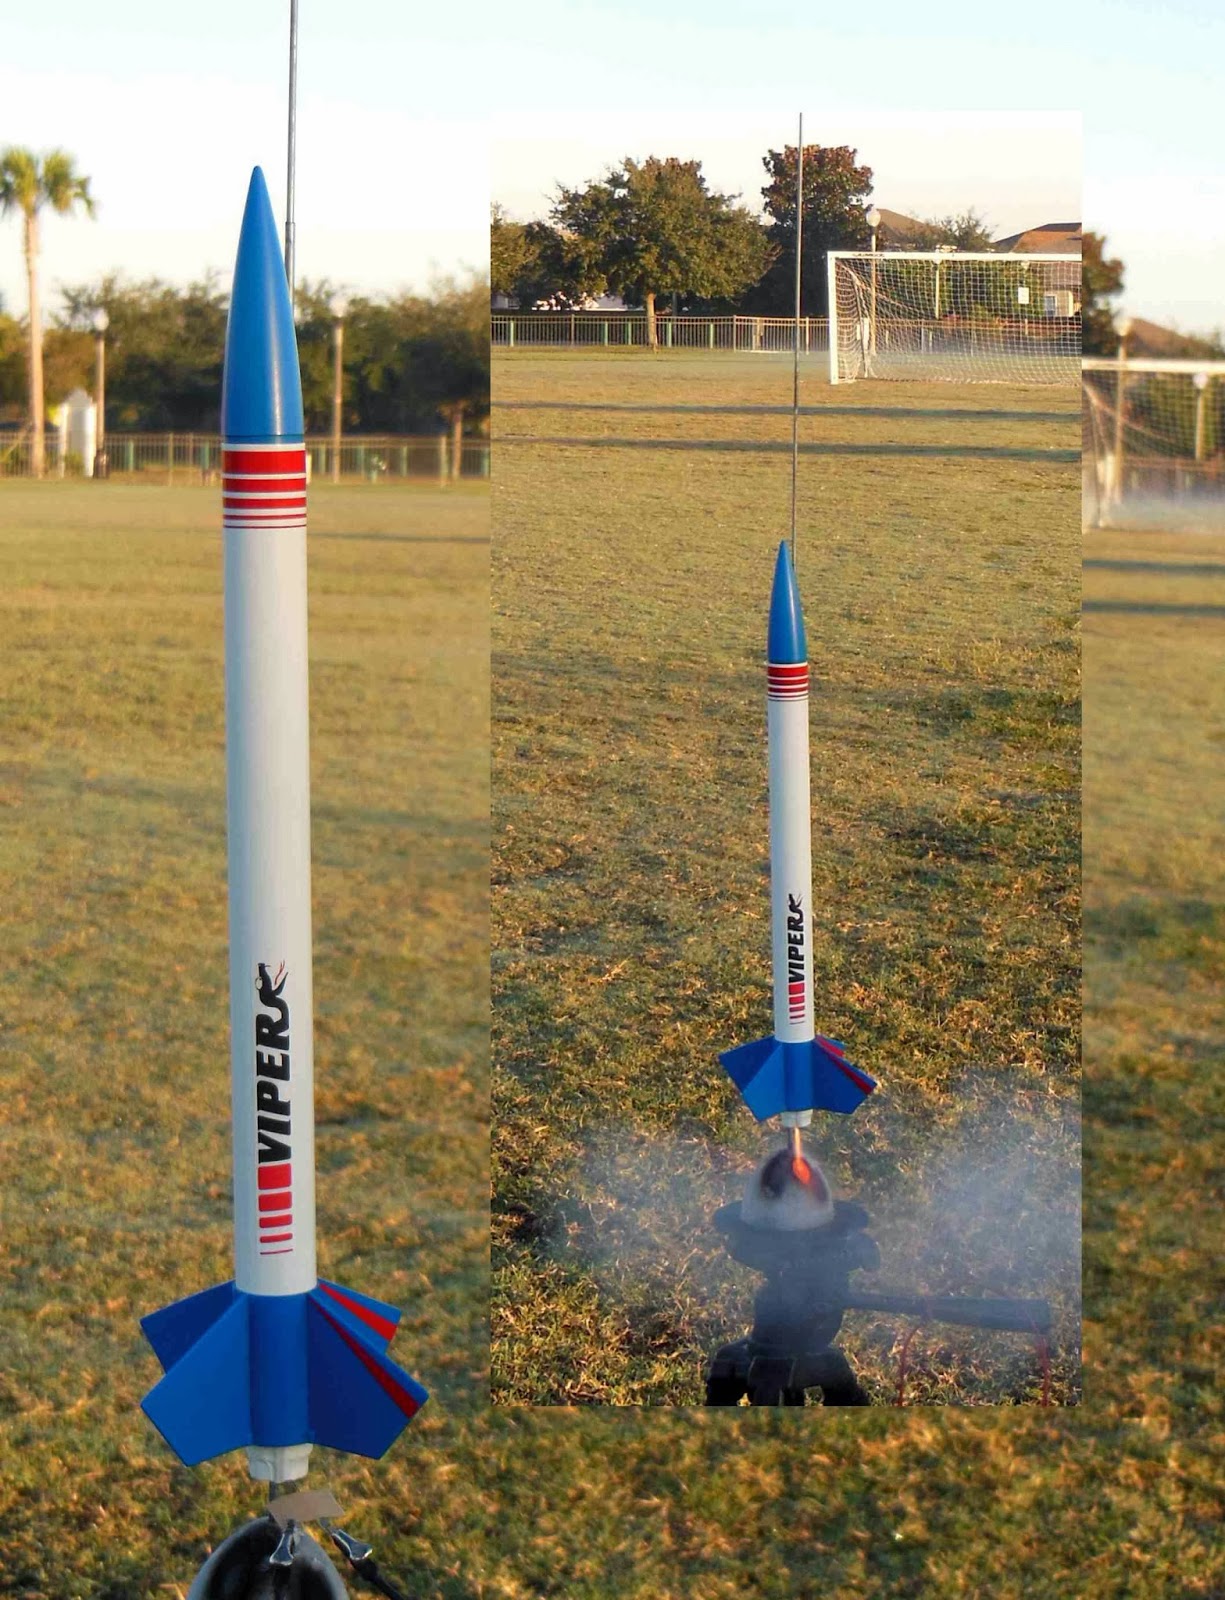 Quest Viper Model Rocket Kit-Skill Level 1 1008 